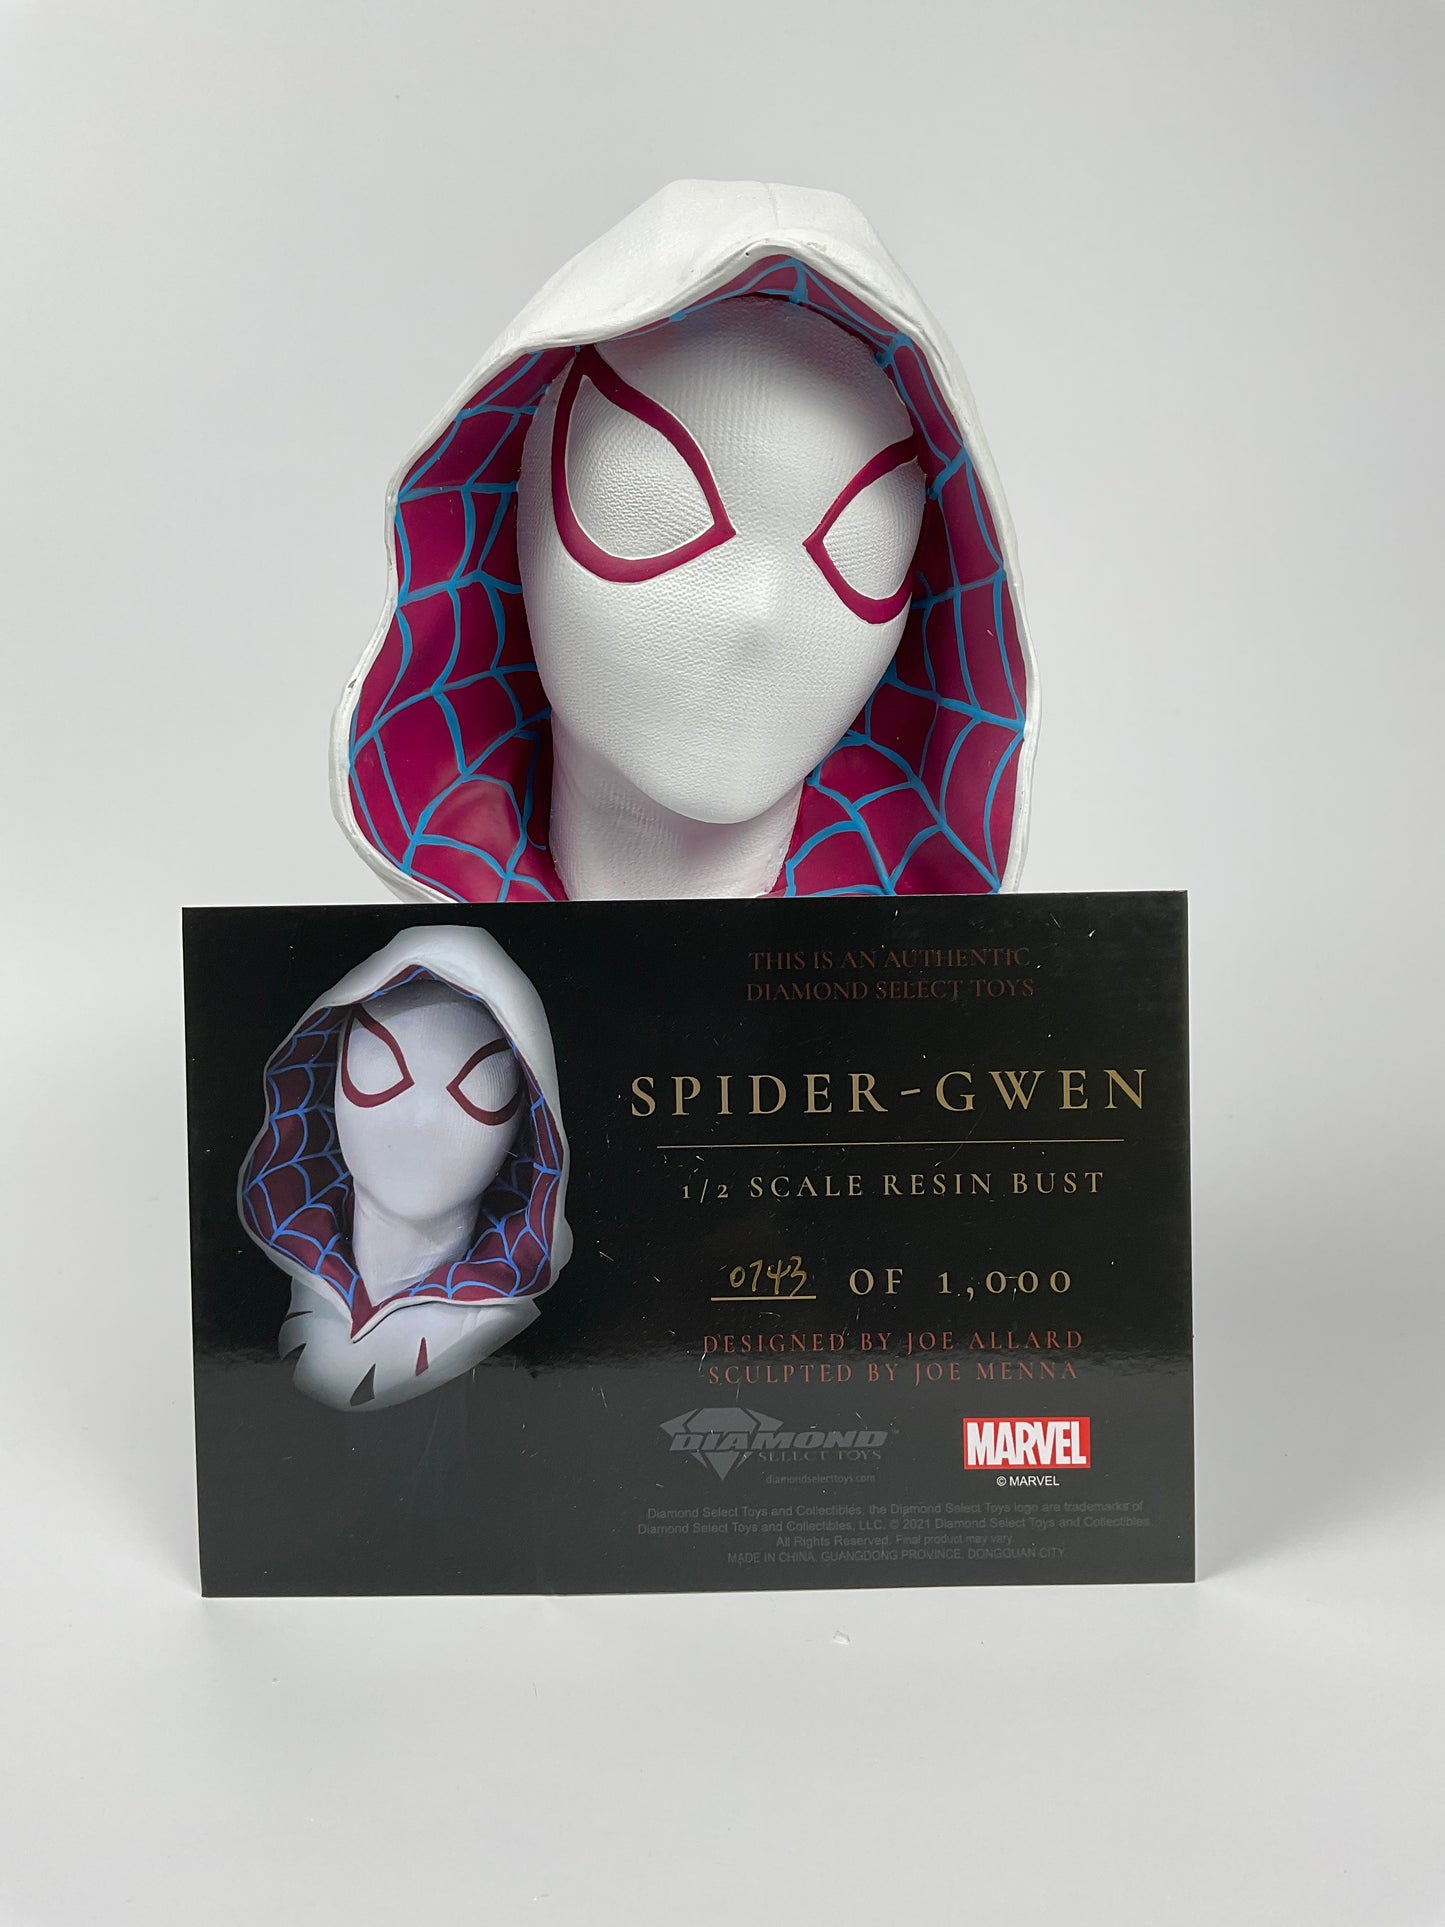 Marvel Spider-Gwen resin bust, Diamond select toys